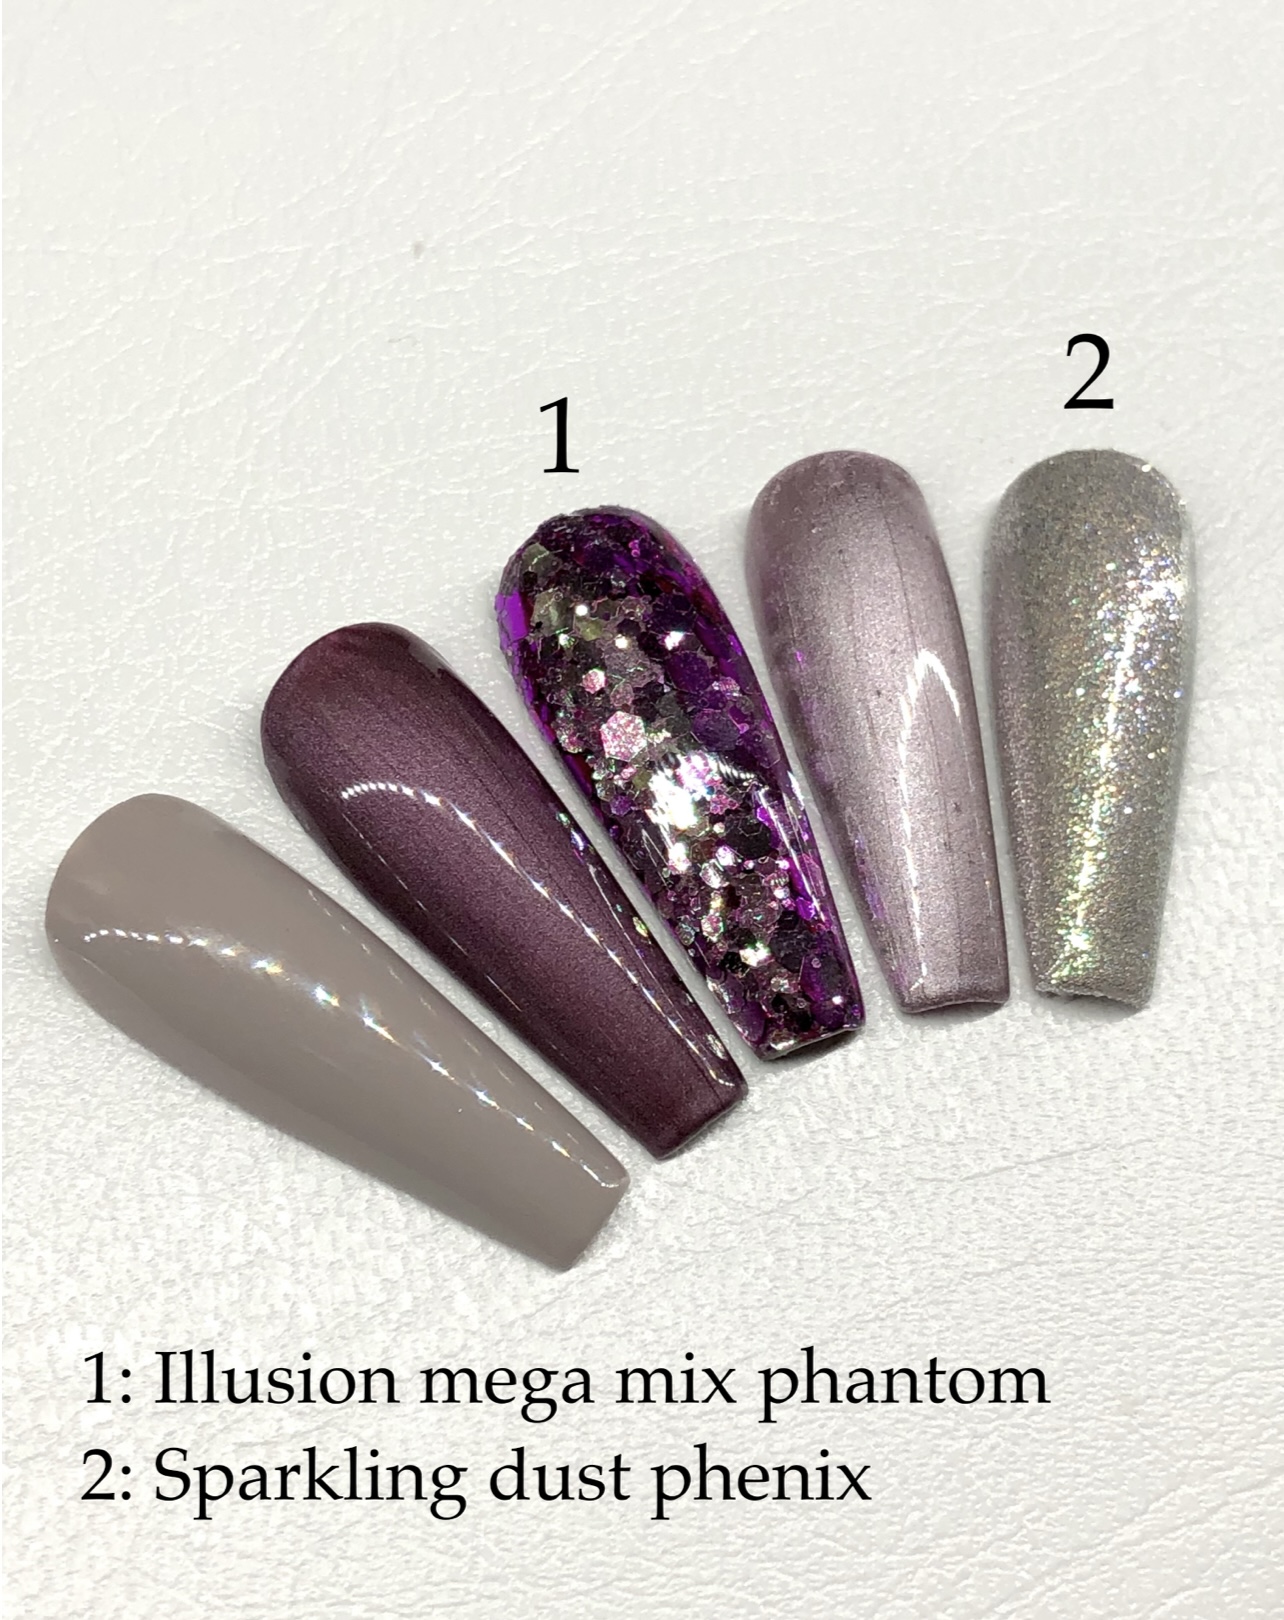 Illusion Mega Mix Phantom